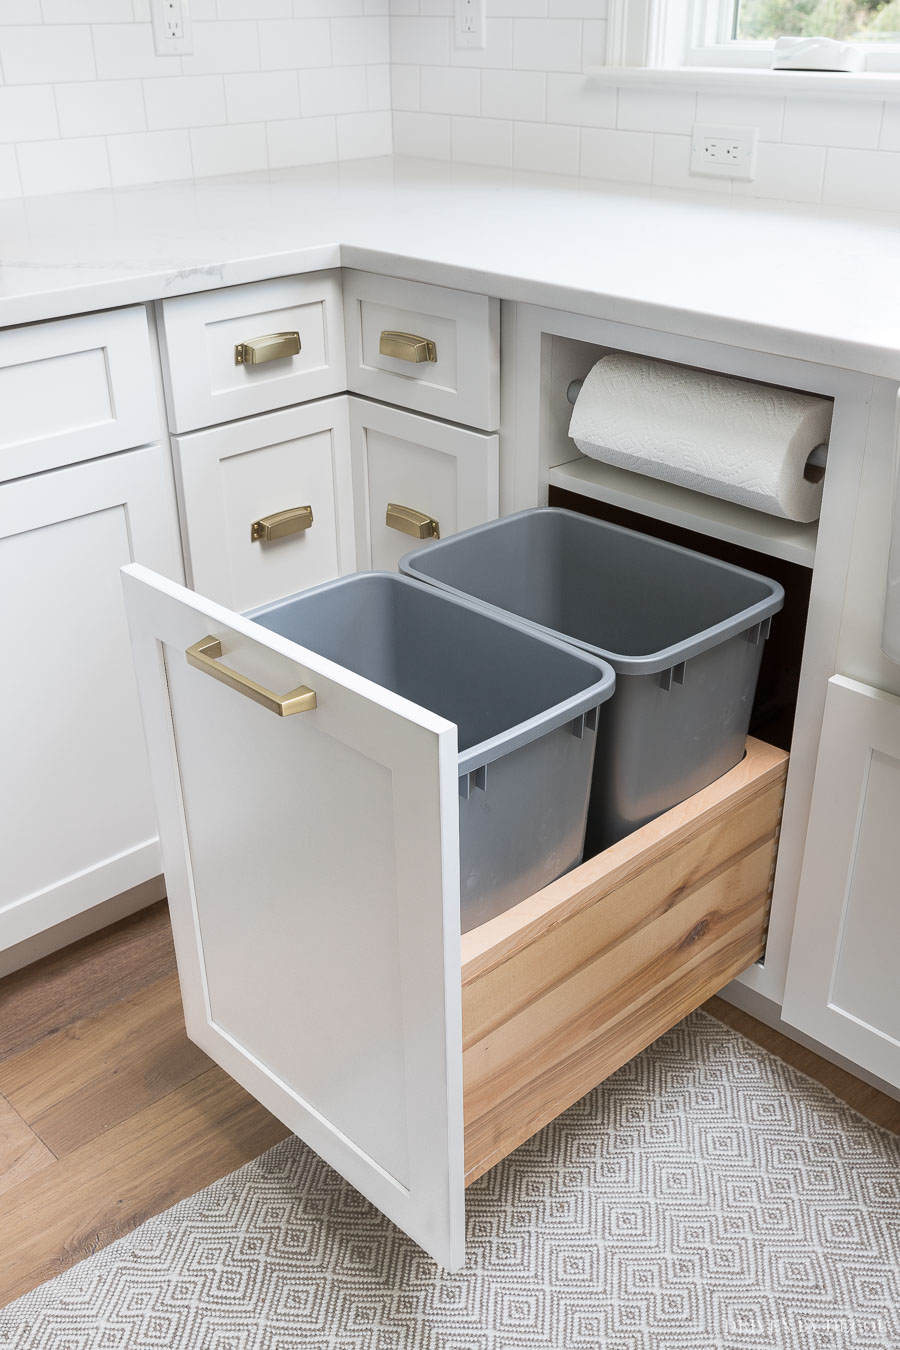 https://www.drivenbydecor.com/wp-content/uploads/2018/08/kitchen-garbage-pull-out-cabinet-built-in-paper-towel-holder-organization.jpg